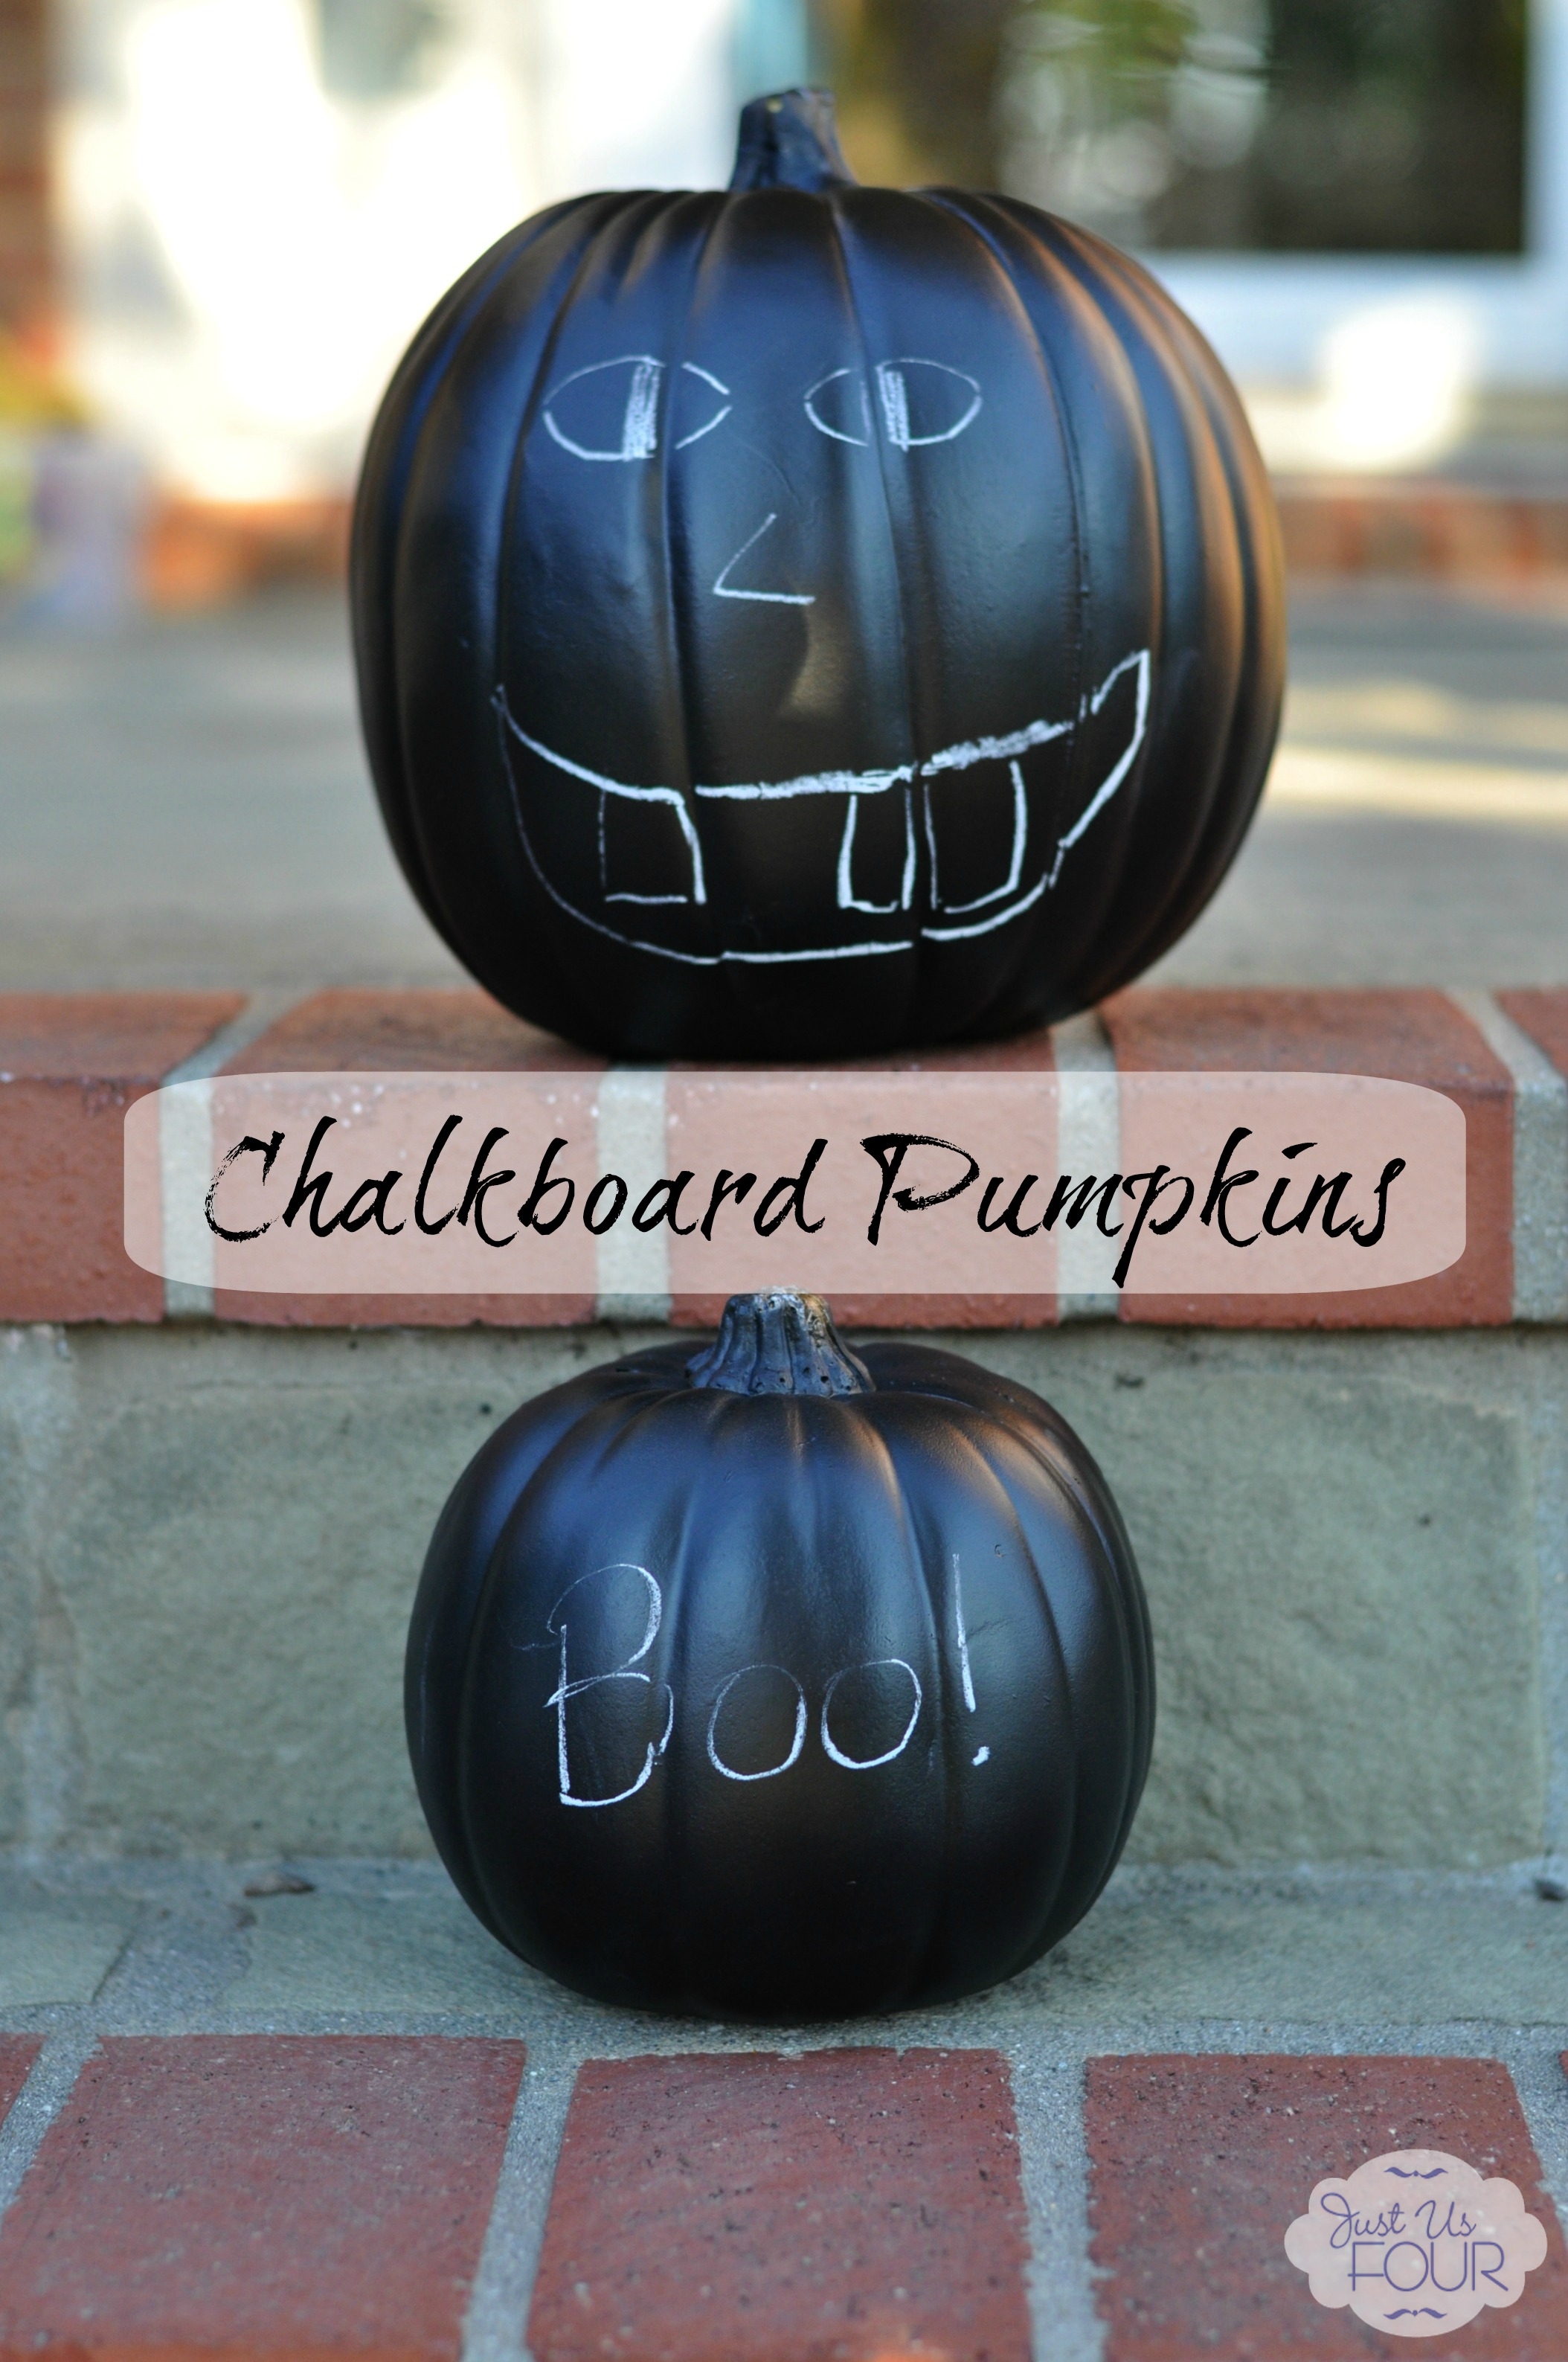 Chalkboard Paint Pumpkins - My Suburban Kitchen